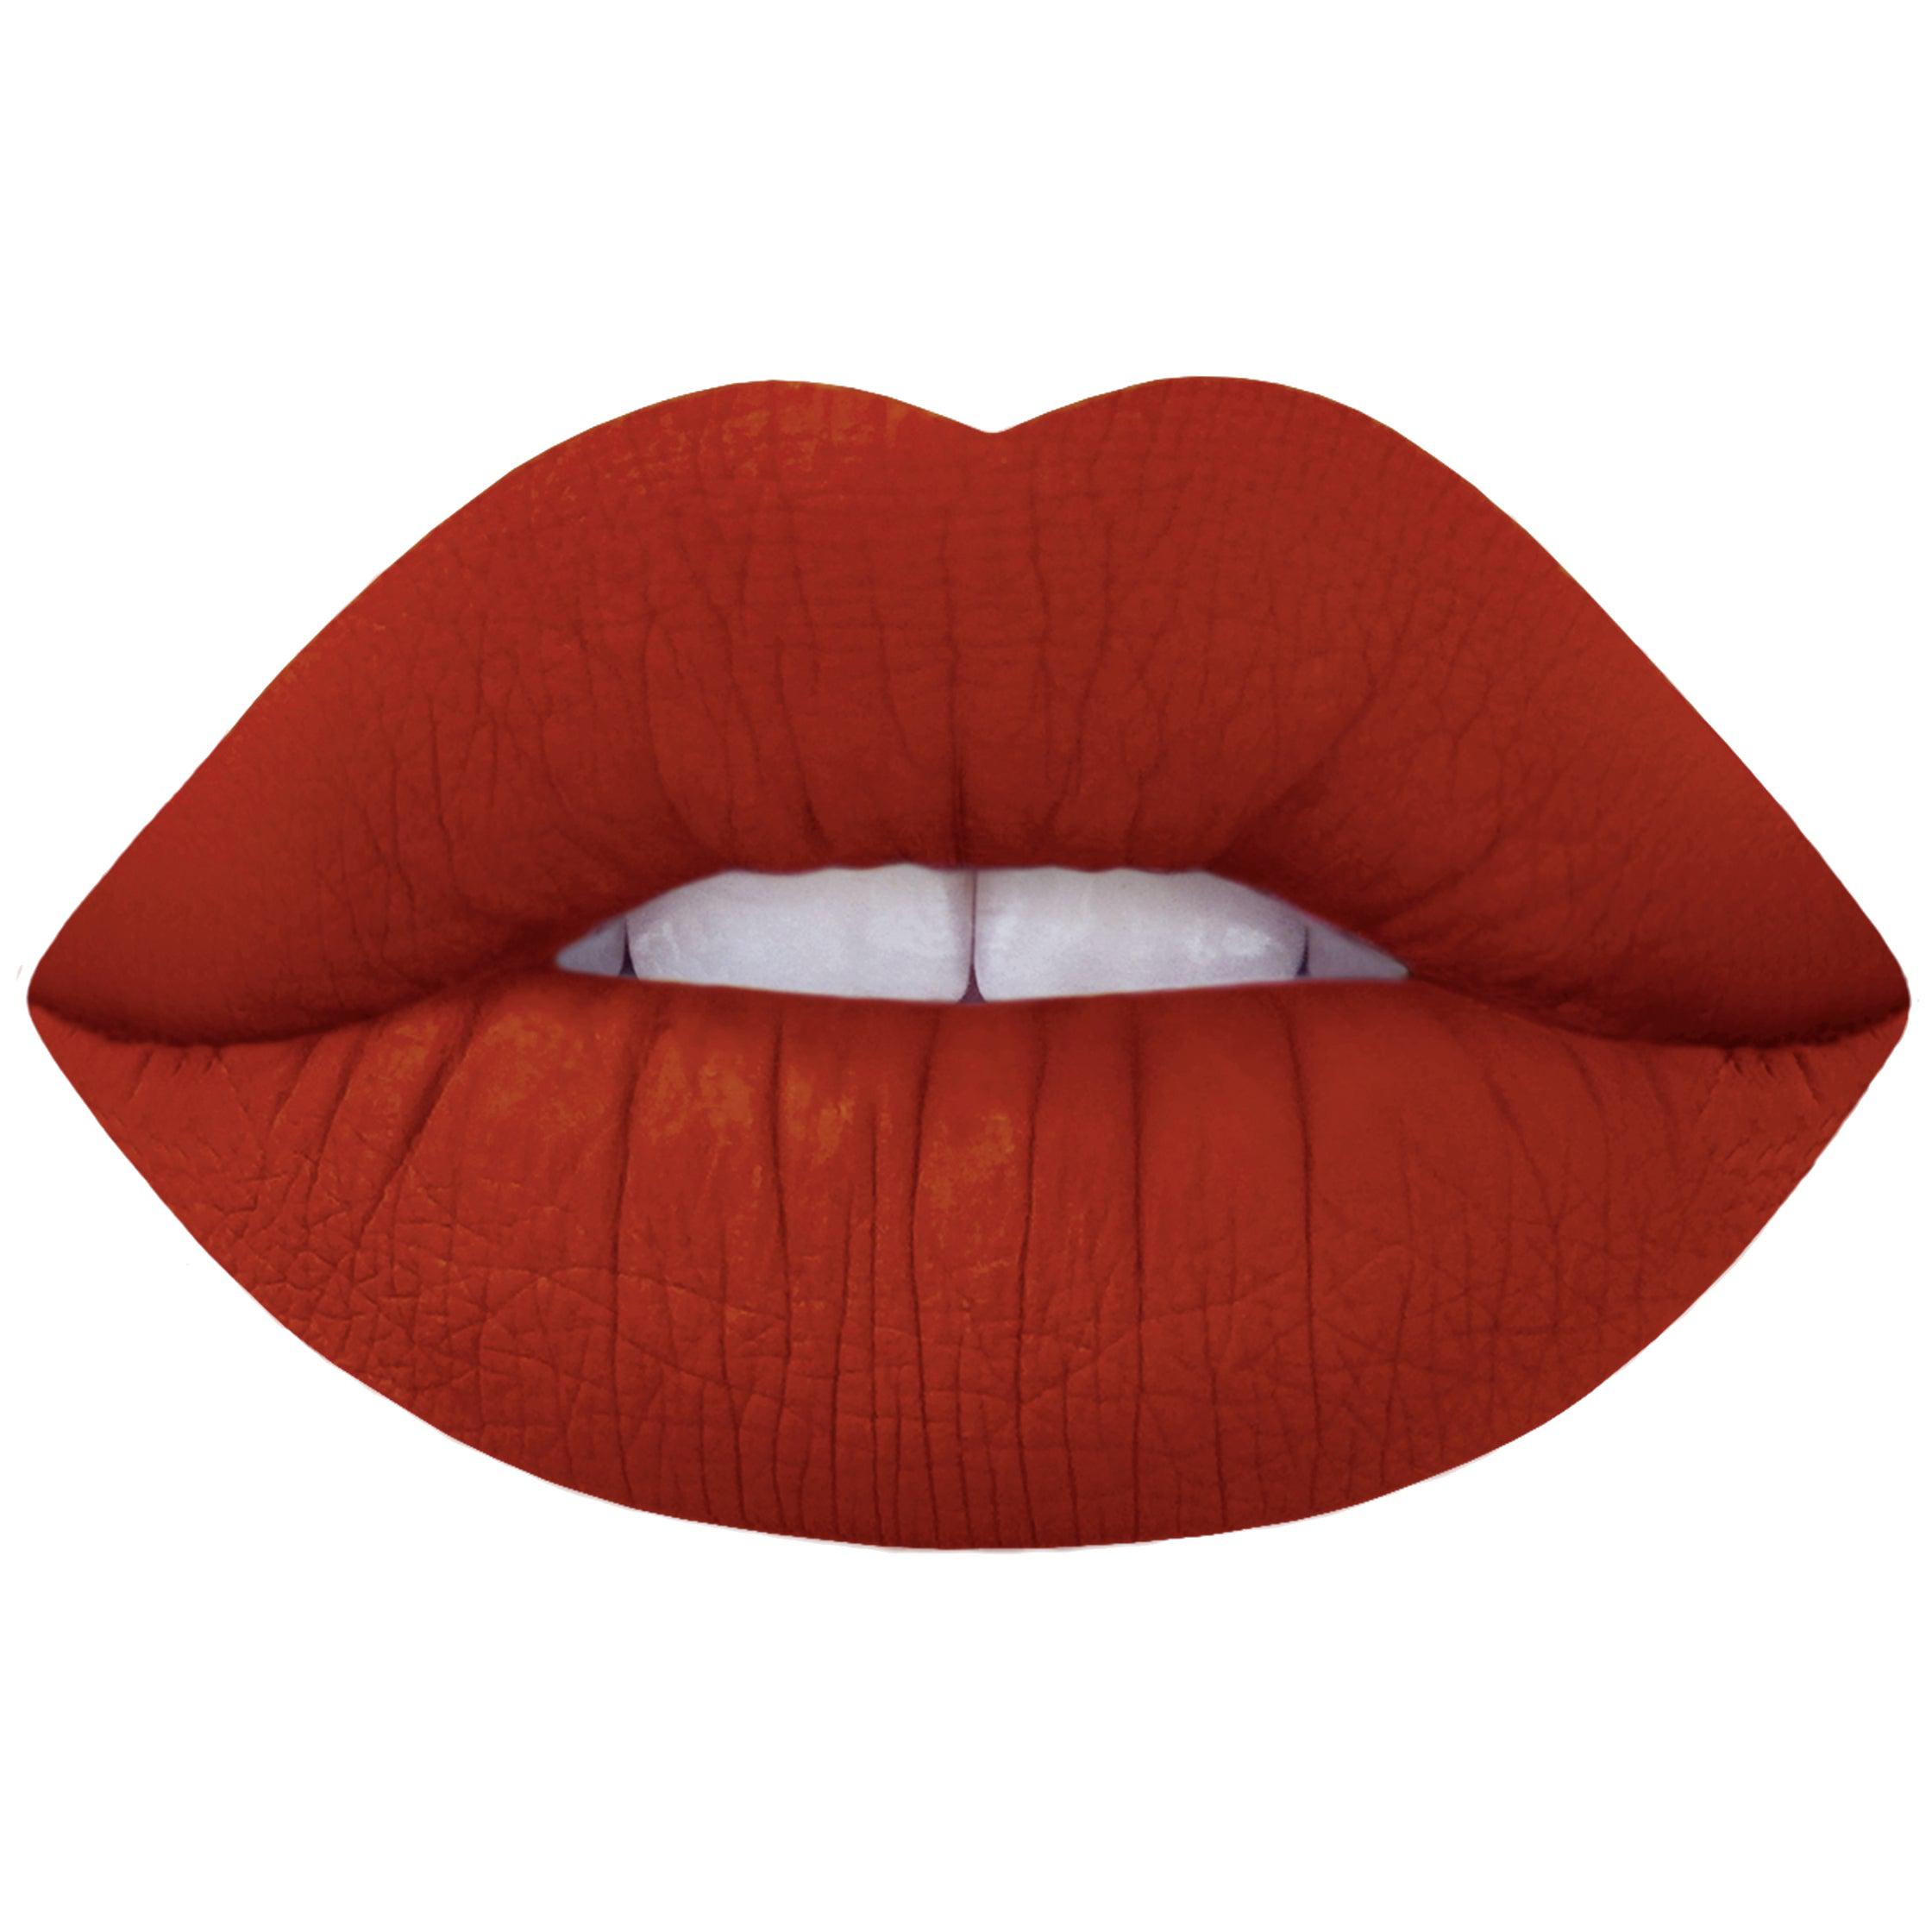 Velvetines Liquid Lipstick variant:Pumpkin